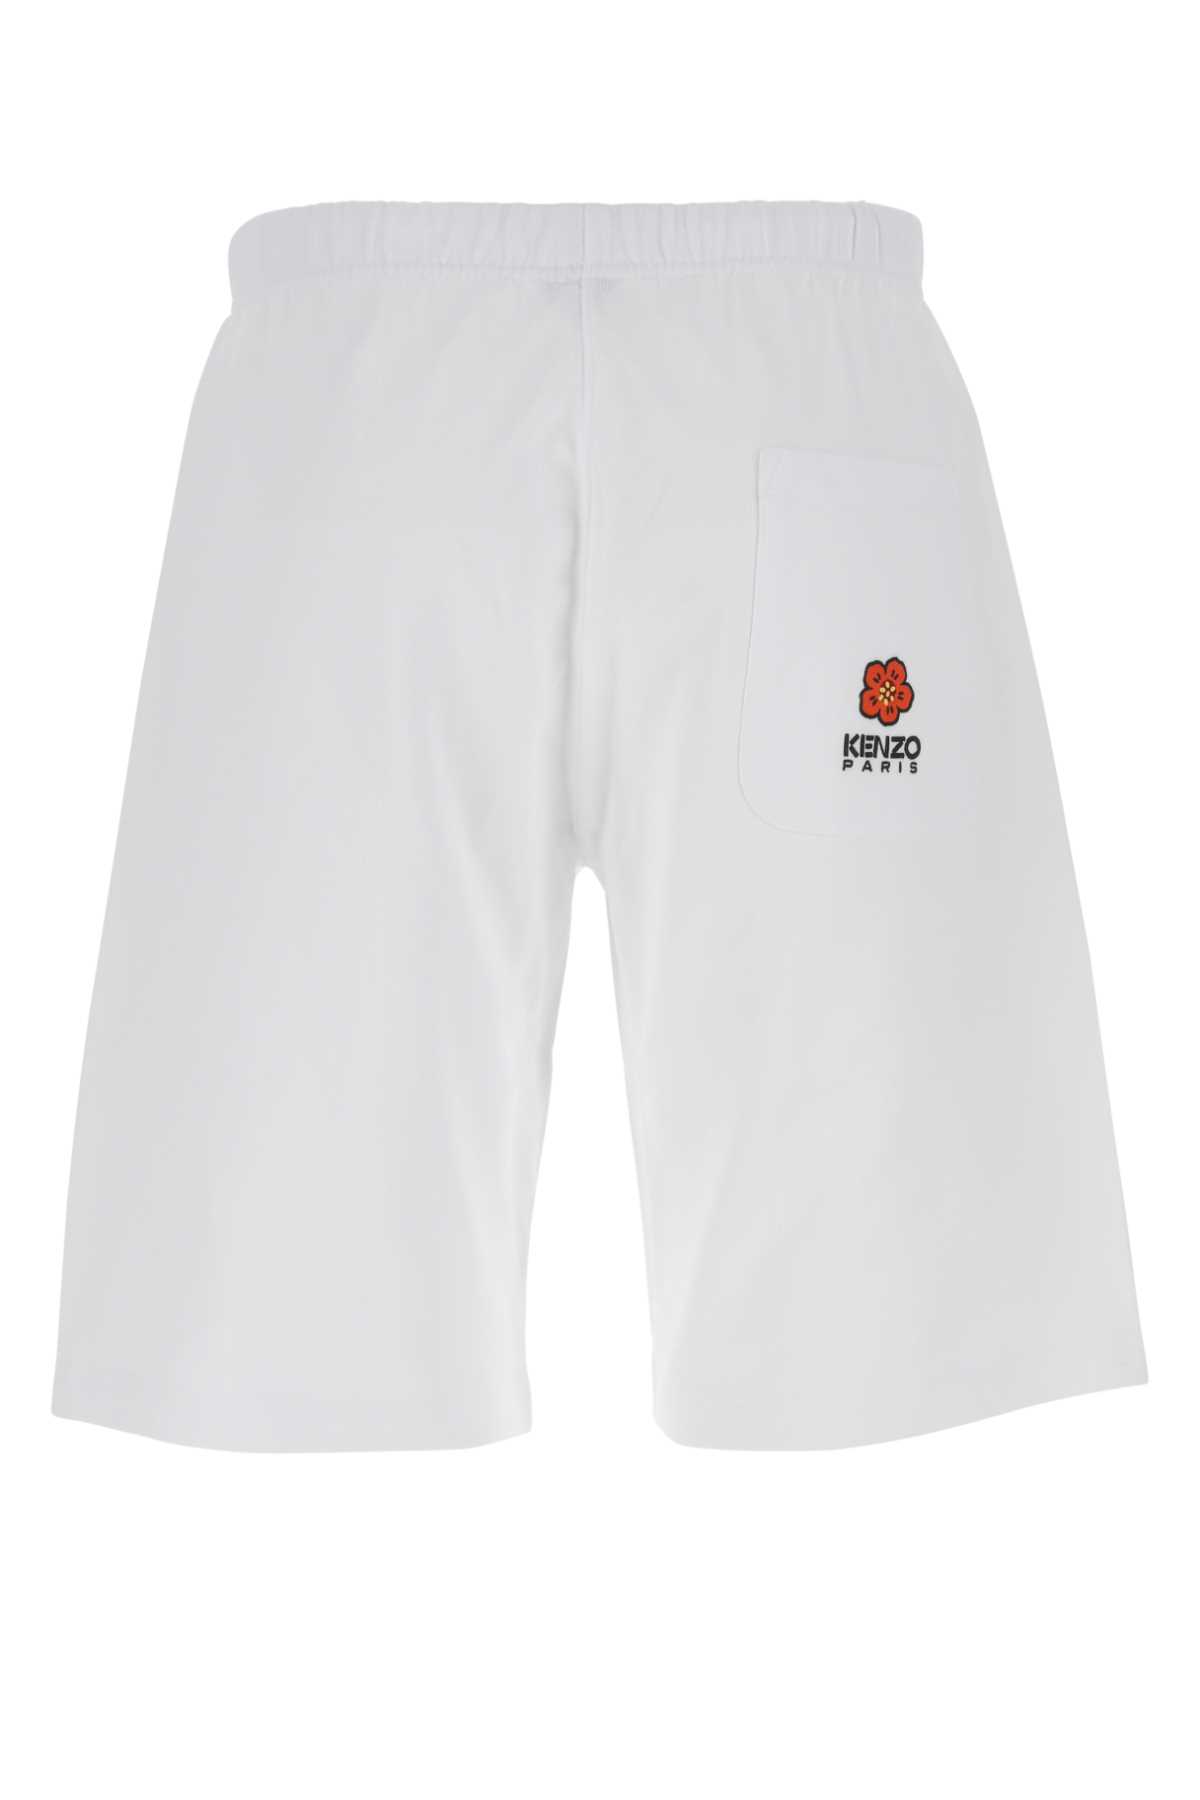 Kenzo White Stretch Cotton Bermuda Shorts In 01